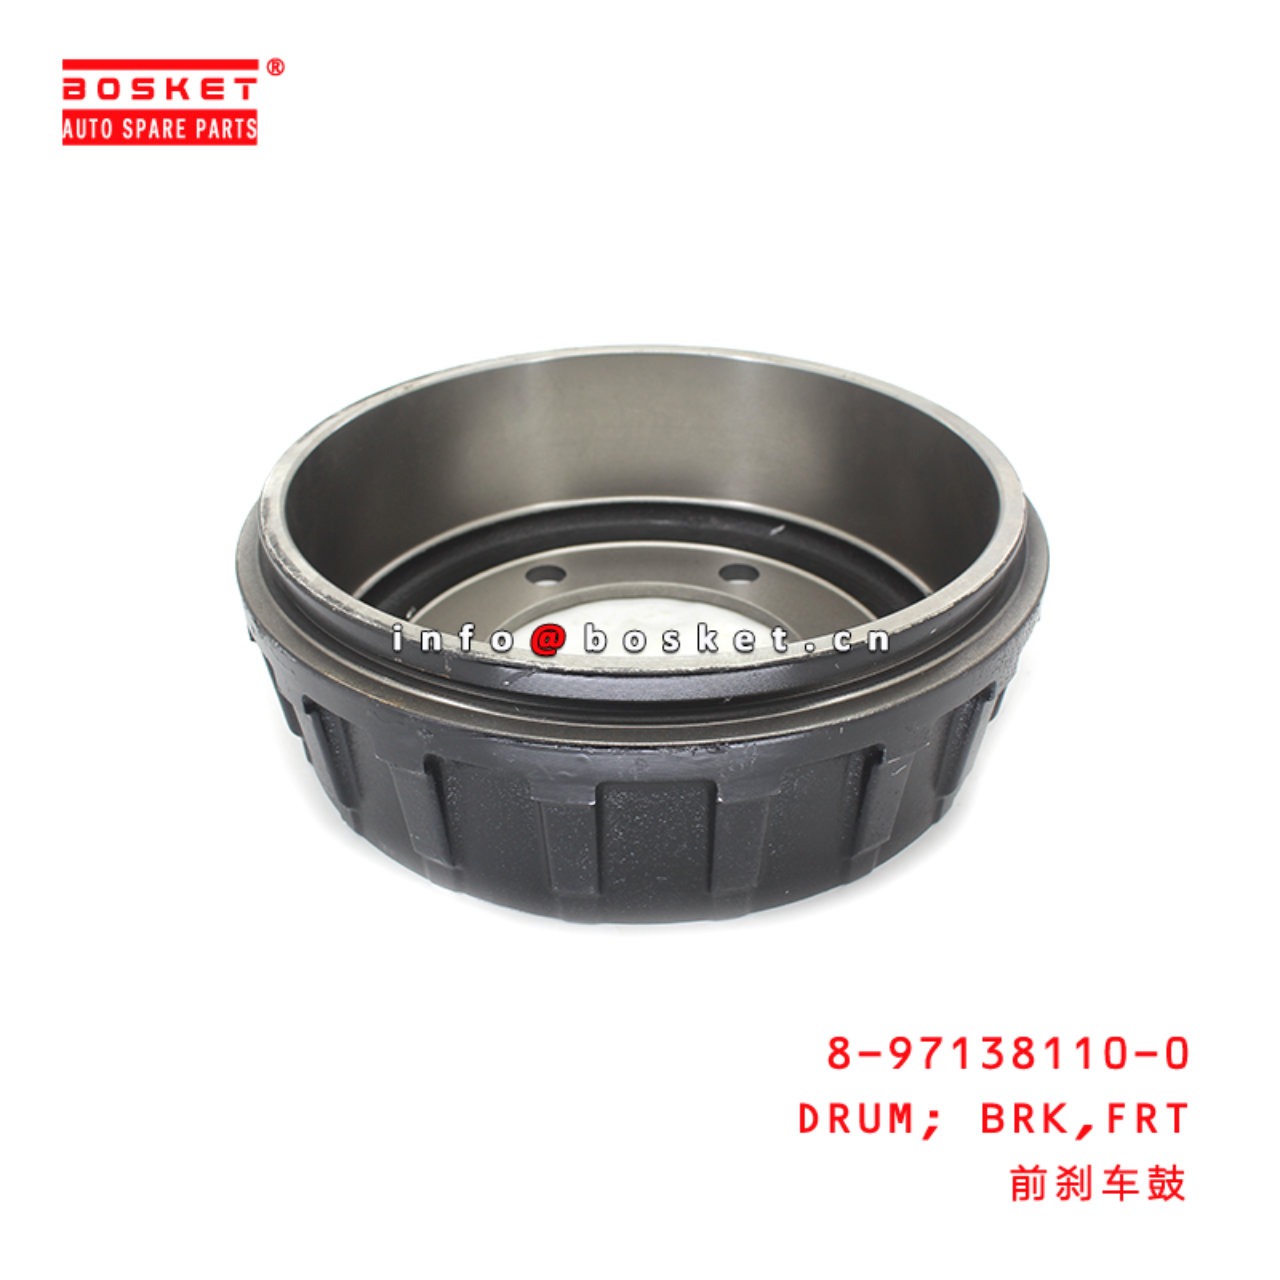 8-97138110-0 Front Brake Drum Suitable for ISUZU NPS  8971381100